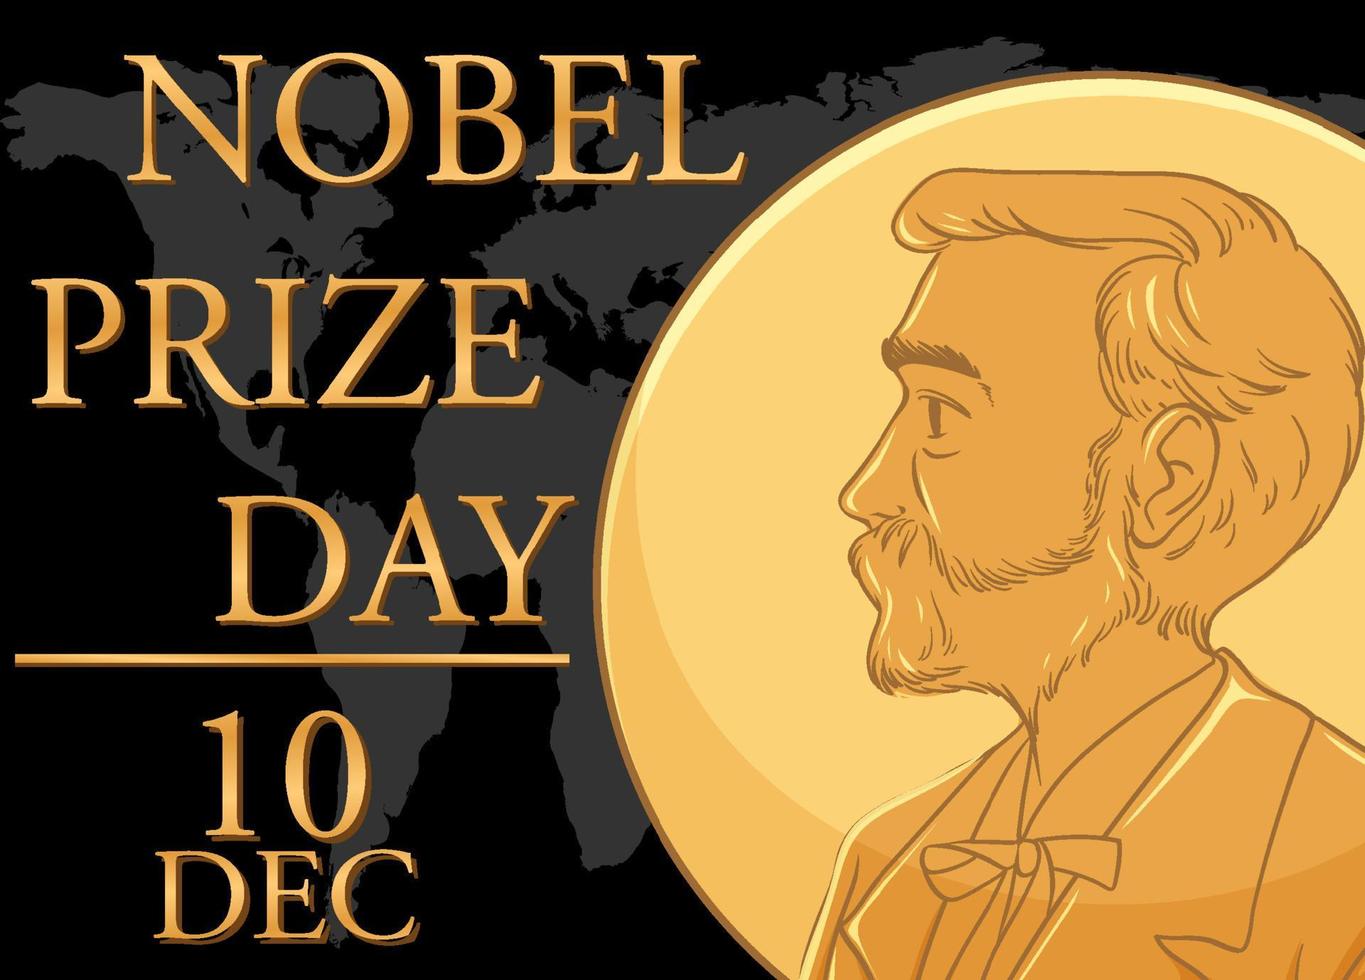 Nobel prize day poster design vector